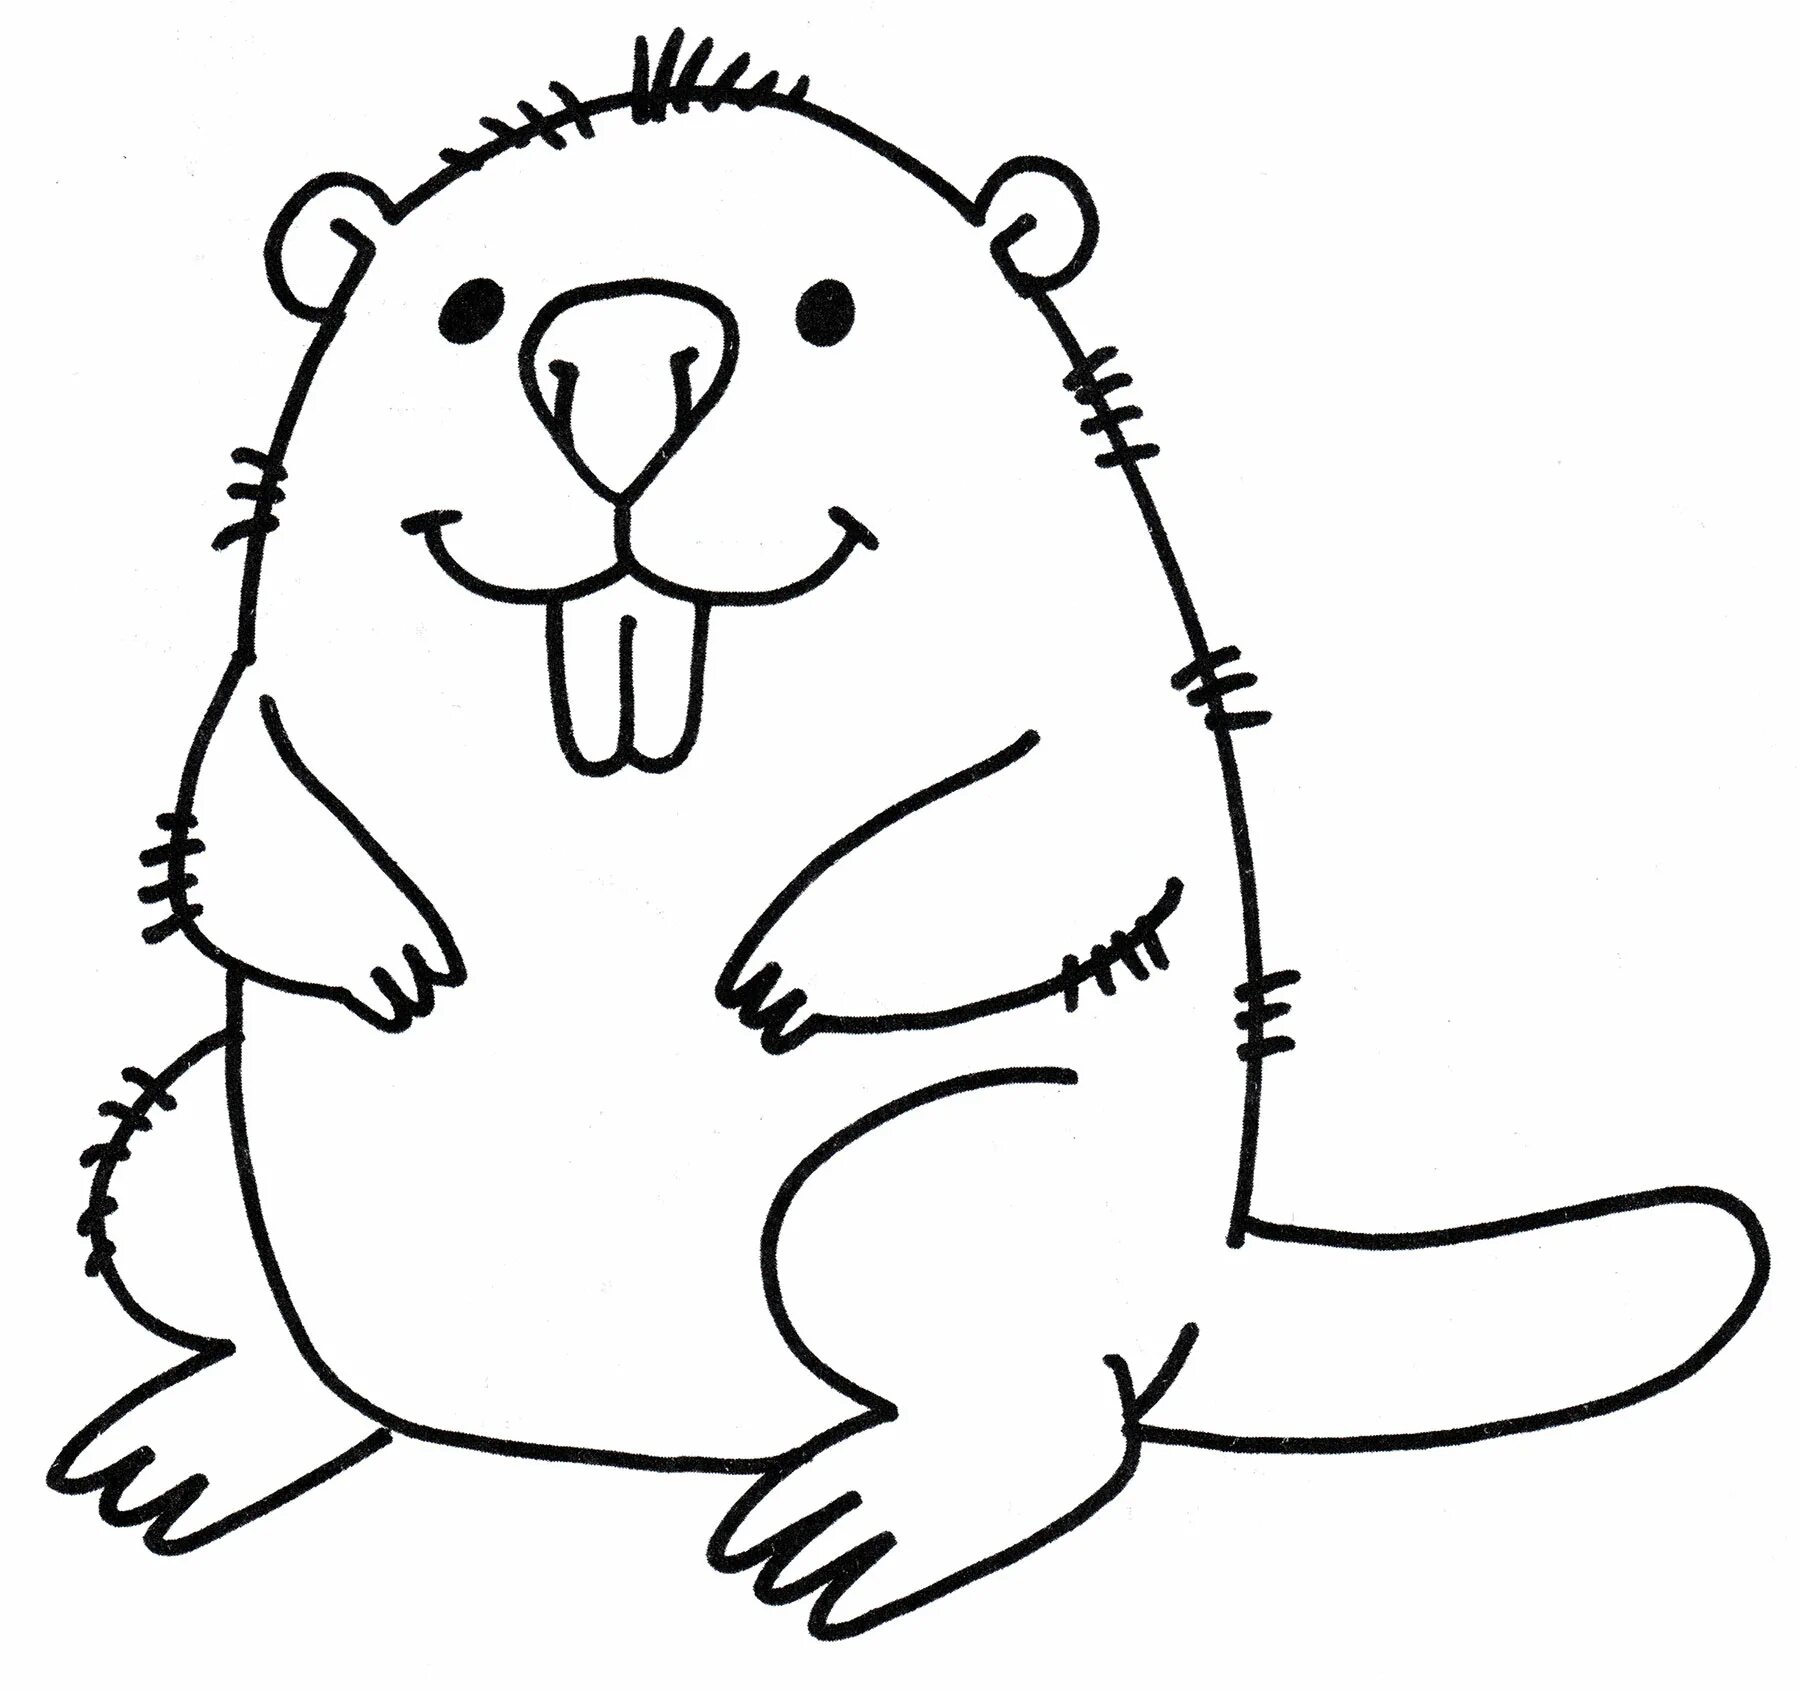 Bubble beaver coloring page